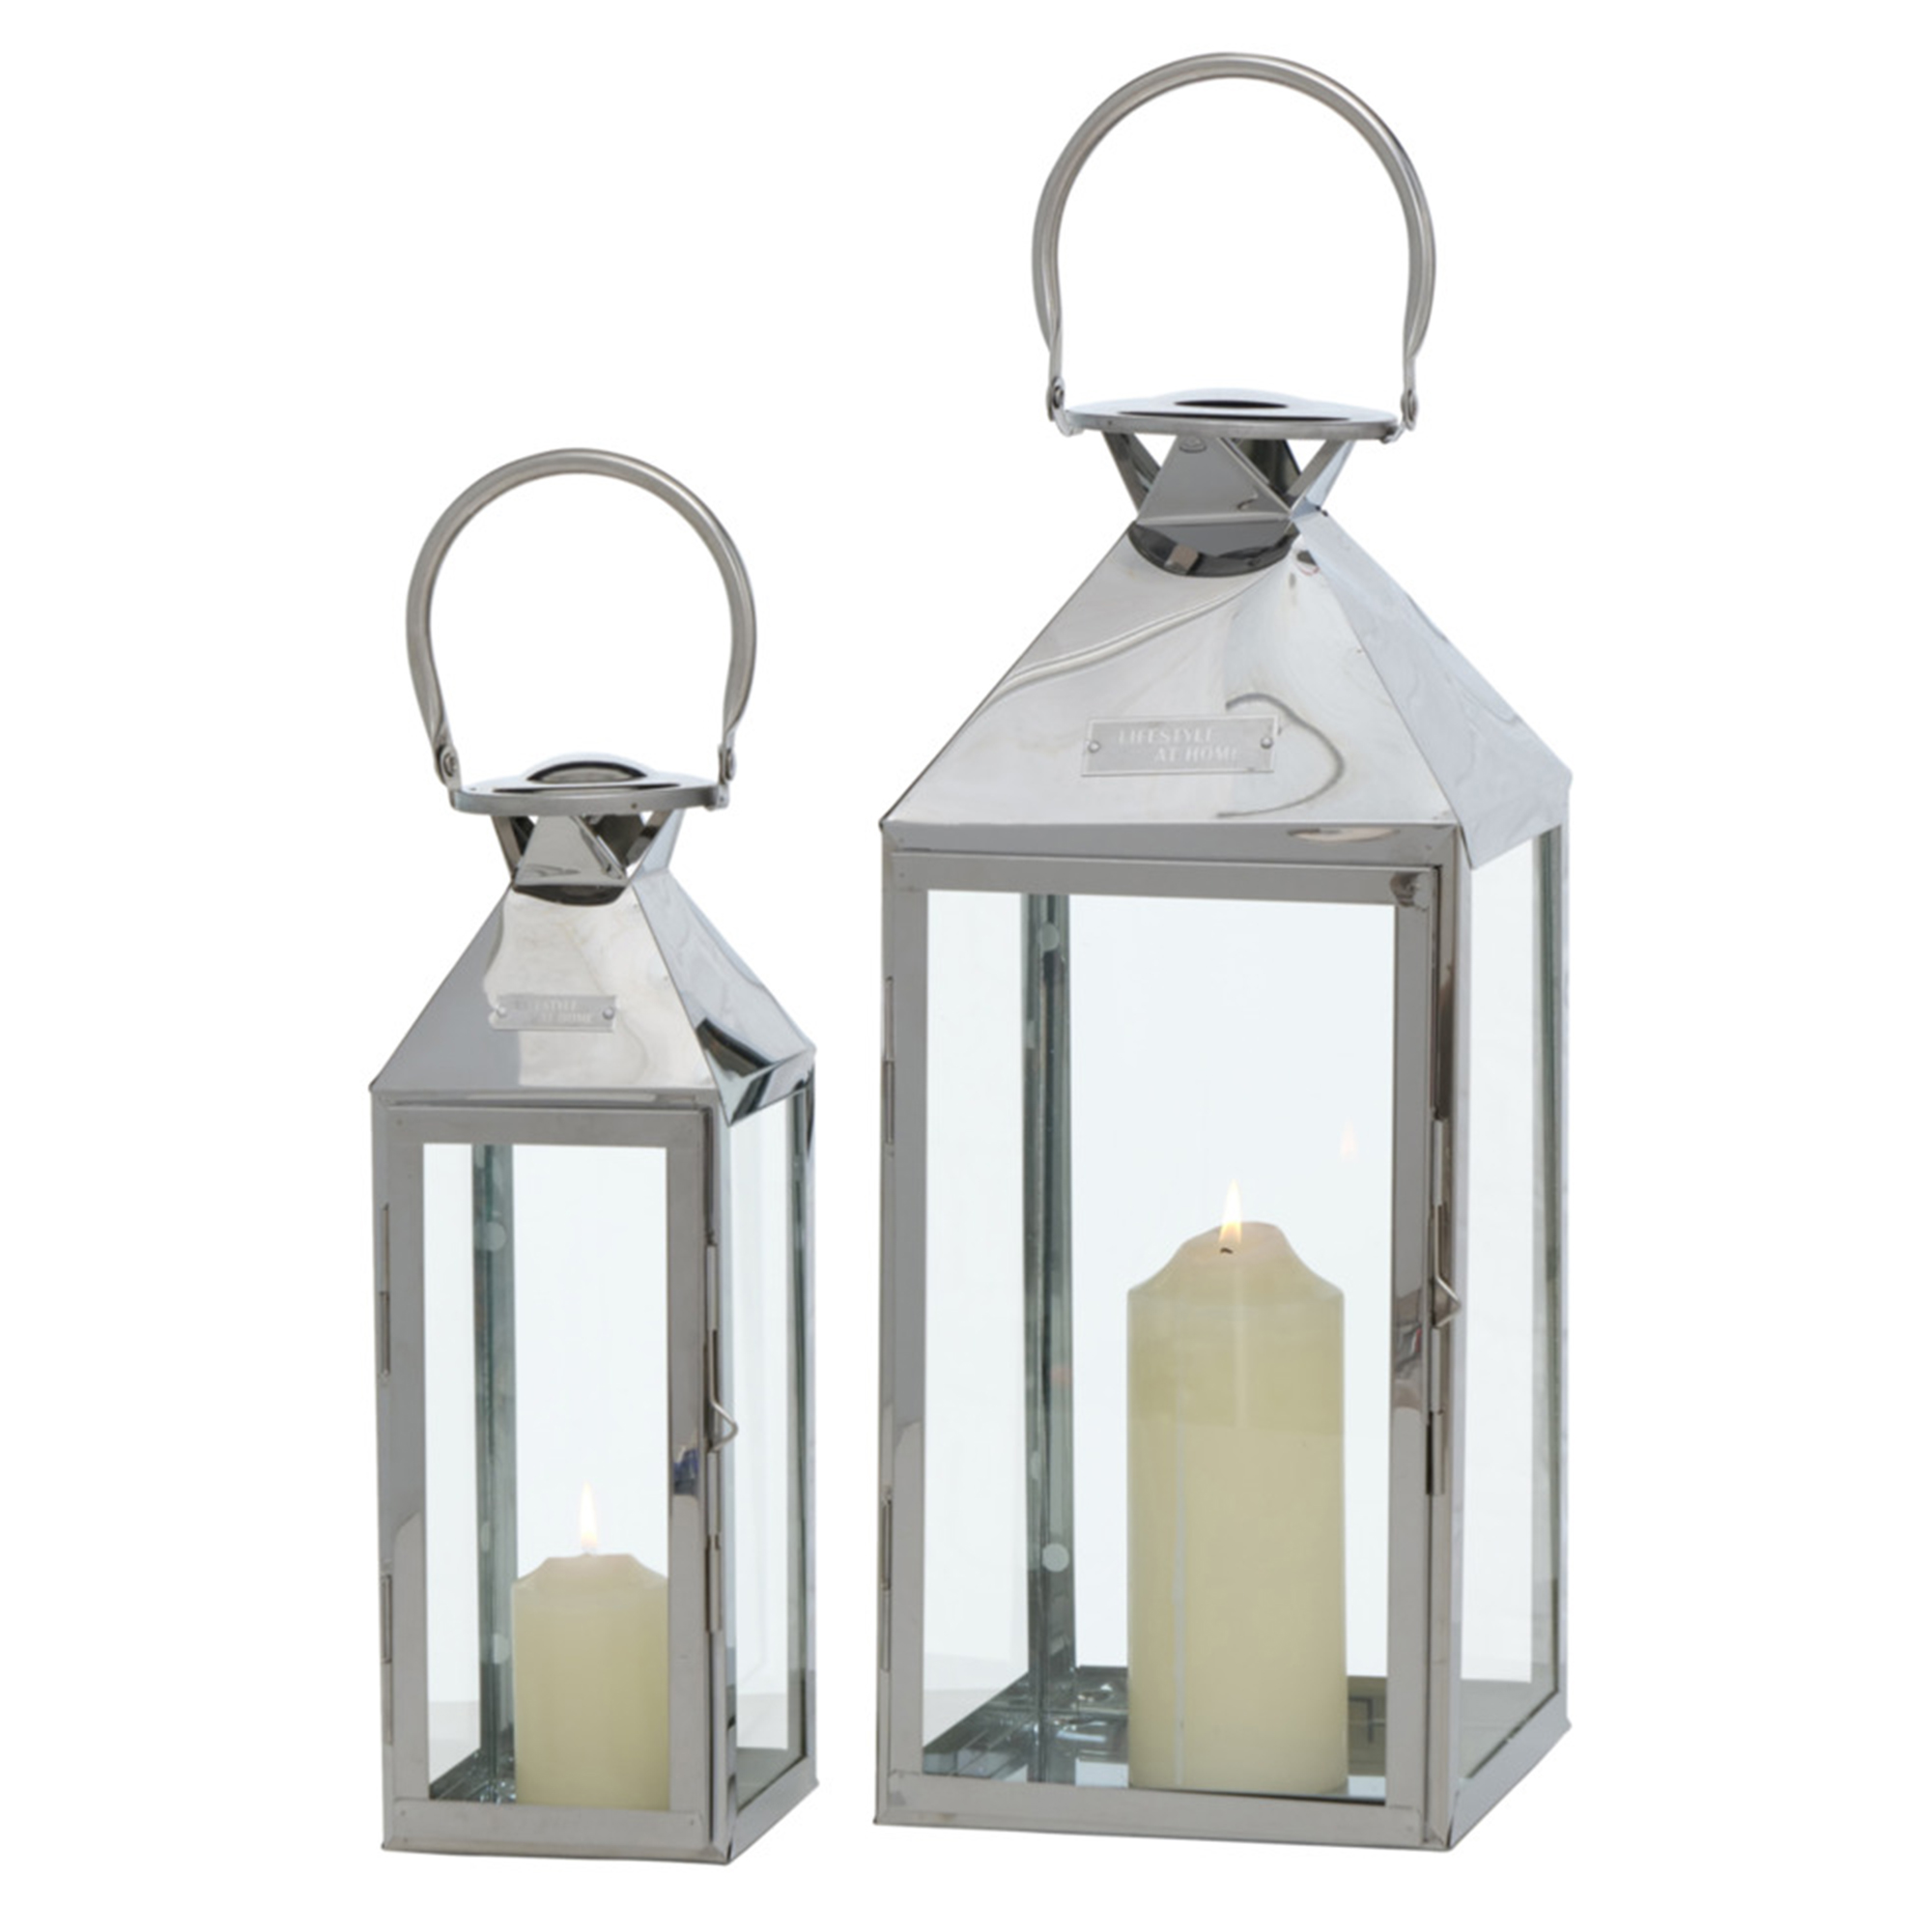 Set of 2 Chrome Lanterns, Silver | Barker & Stonehouse